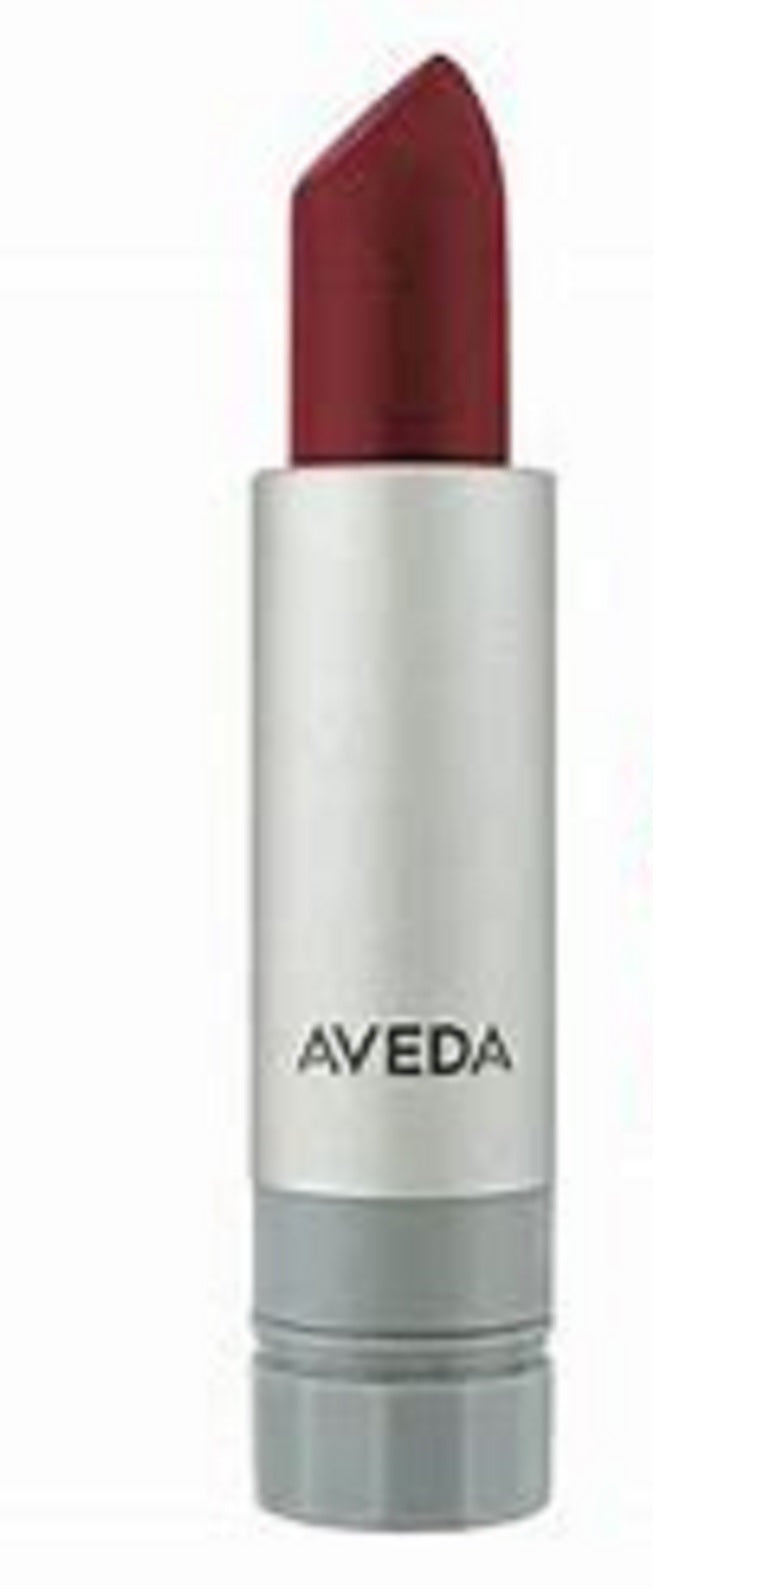 AVEDA new nib lipstick lip color REDWOOD 918 Nourish-Mint discontinued